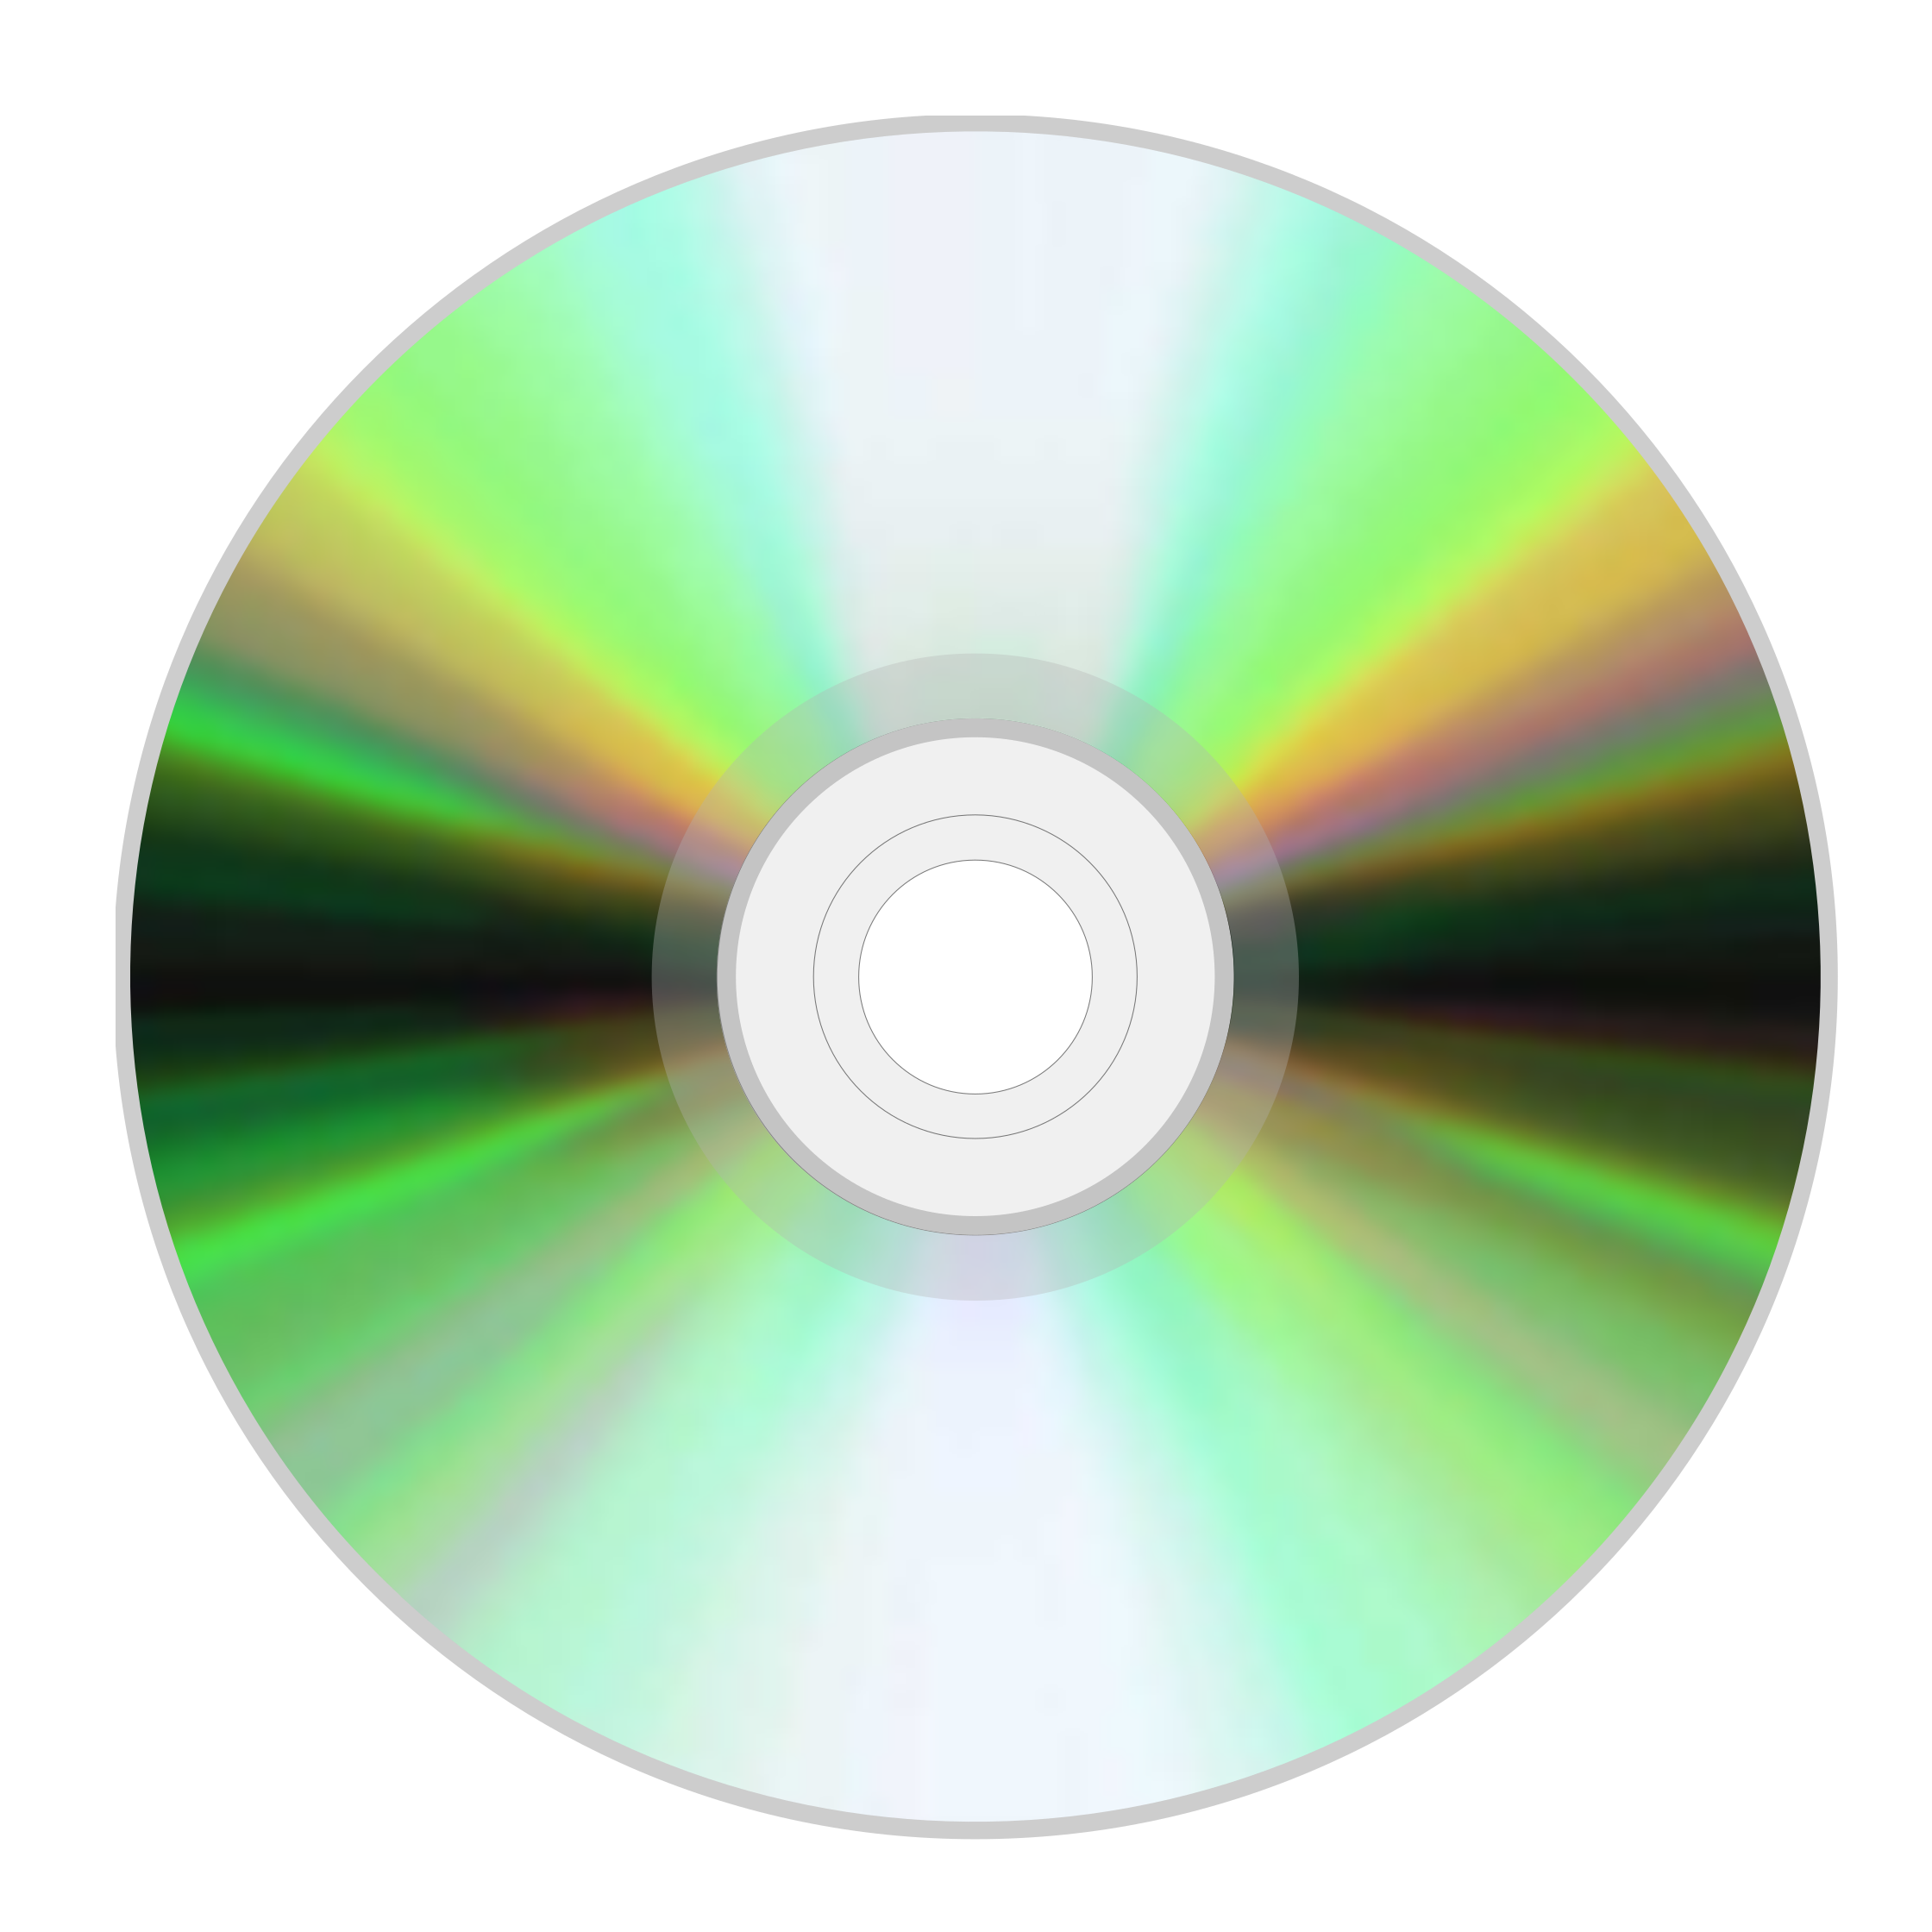 Compact cd Disk PNG HQ Image pngteam.com